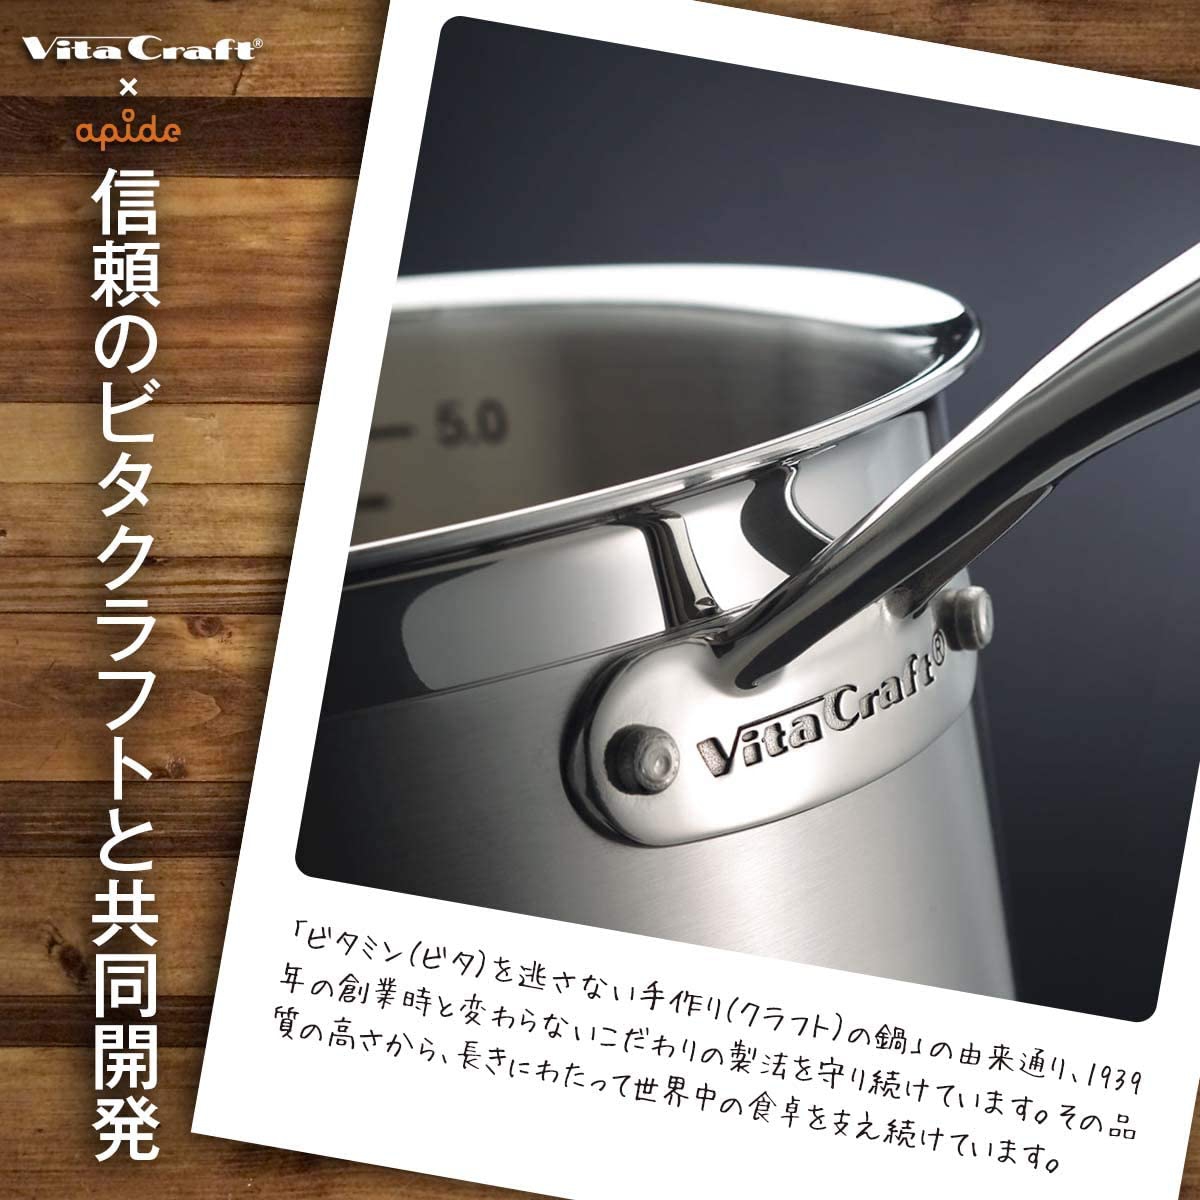 Vita Craft(ビタクラフト) ライト 片手鍋の商品画像サムネ8 